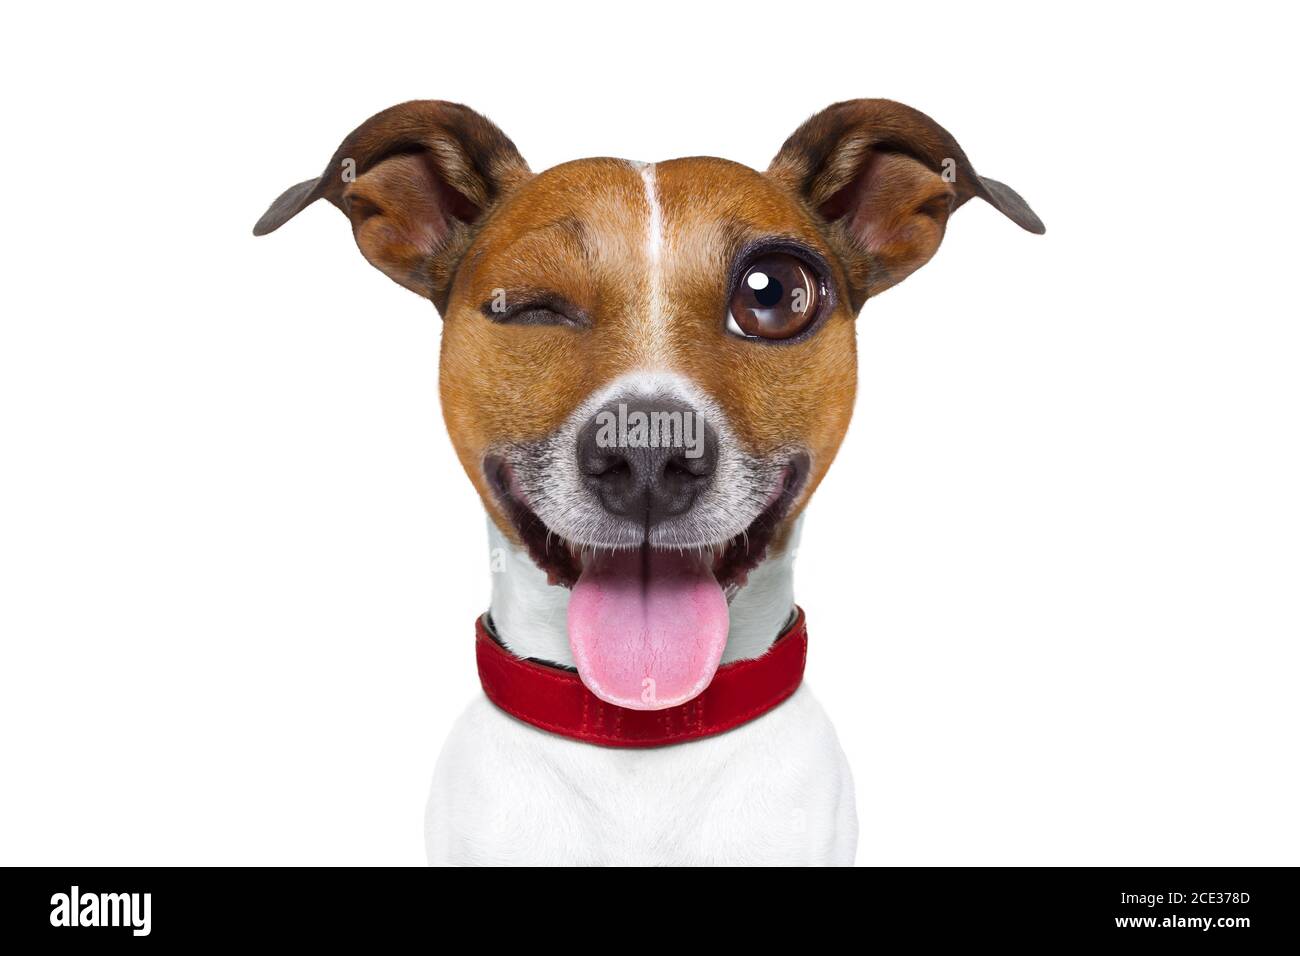 Emoticon or  Emoji dumb  silly dog Stock Photo